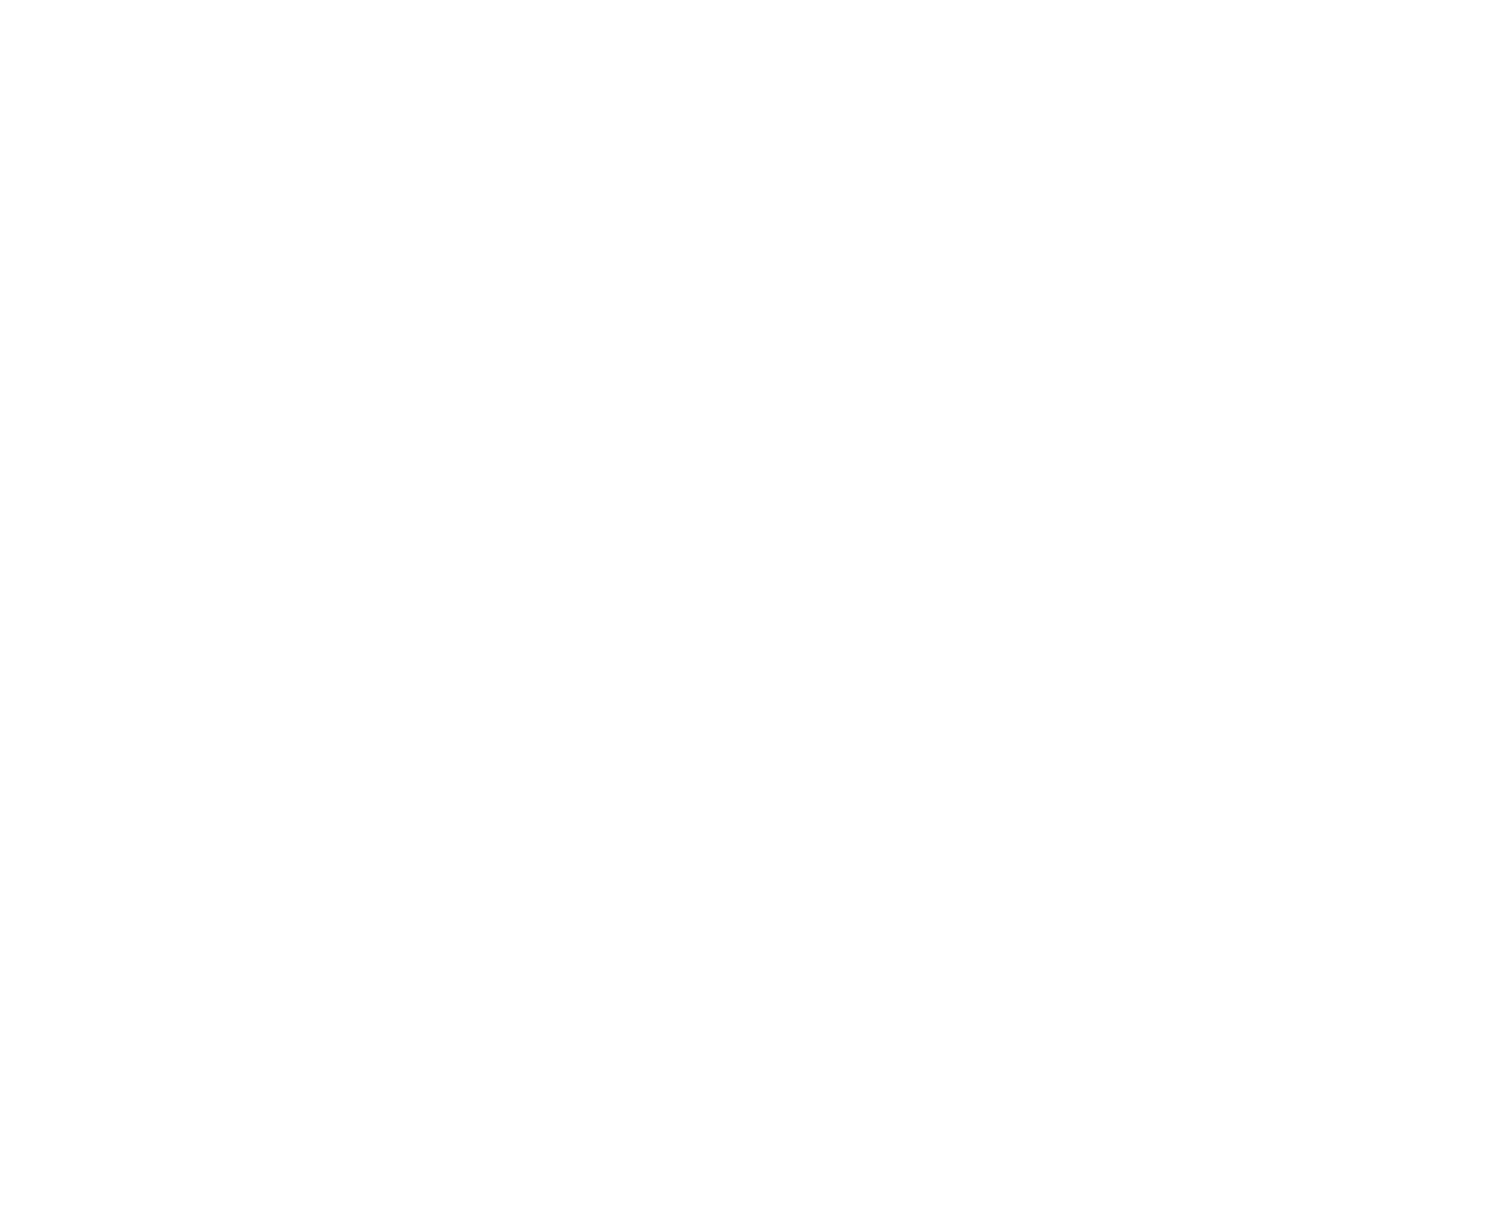 The Tea Crate